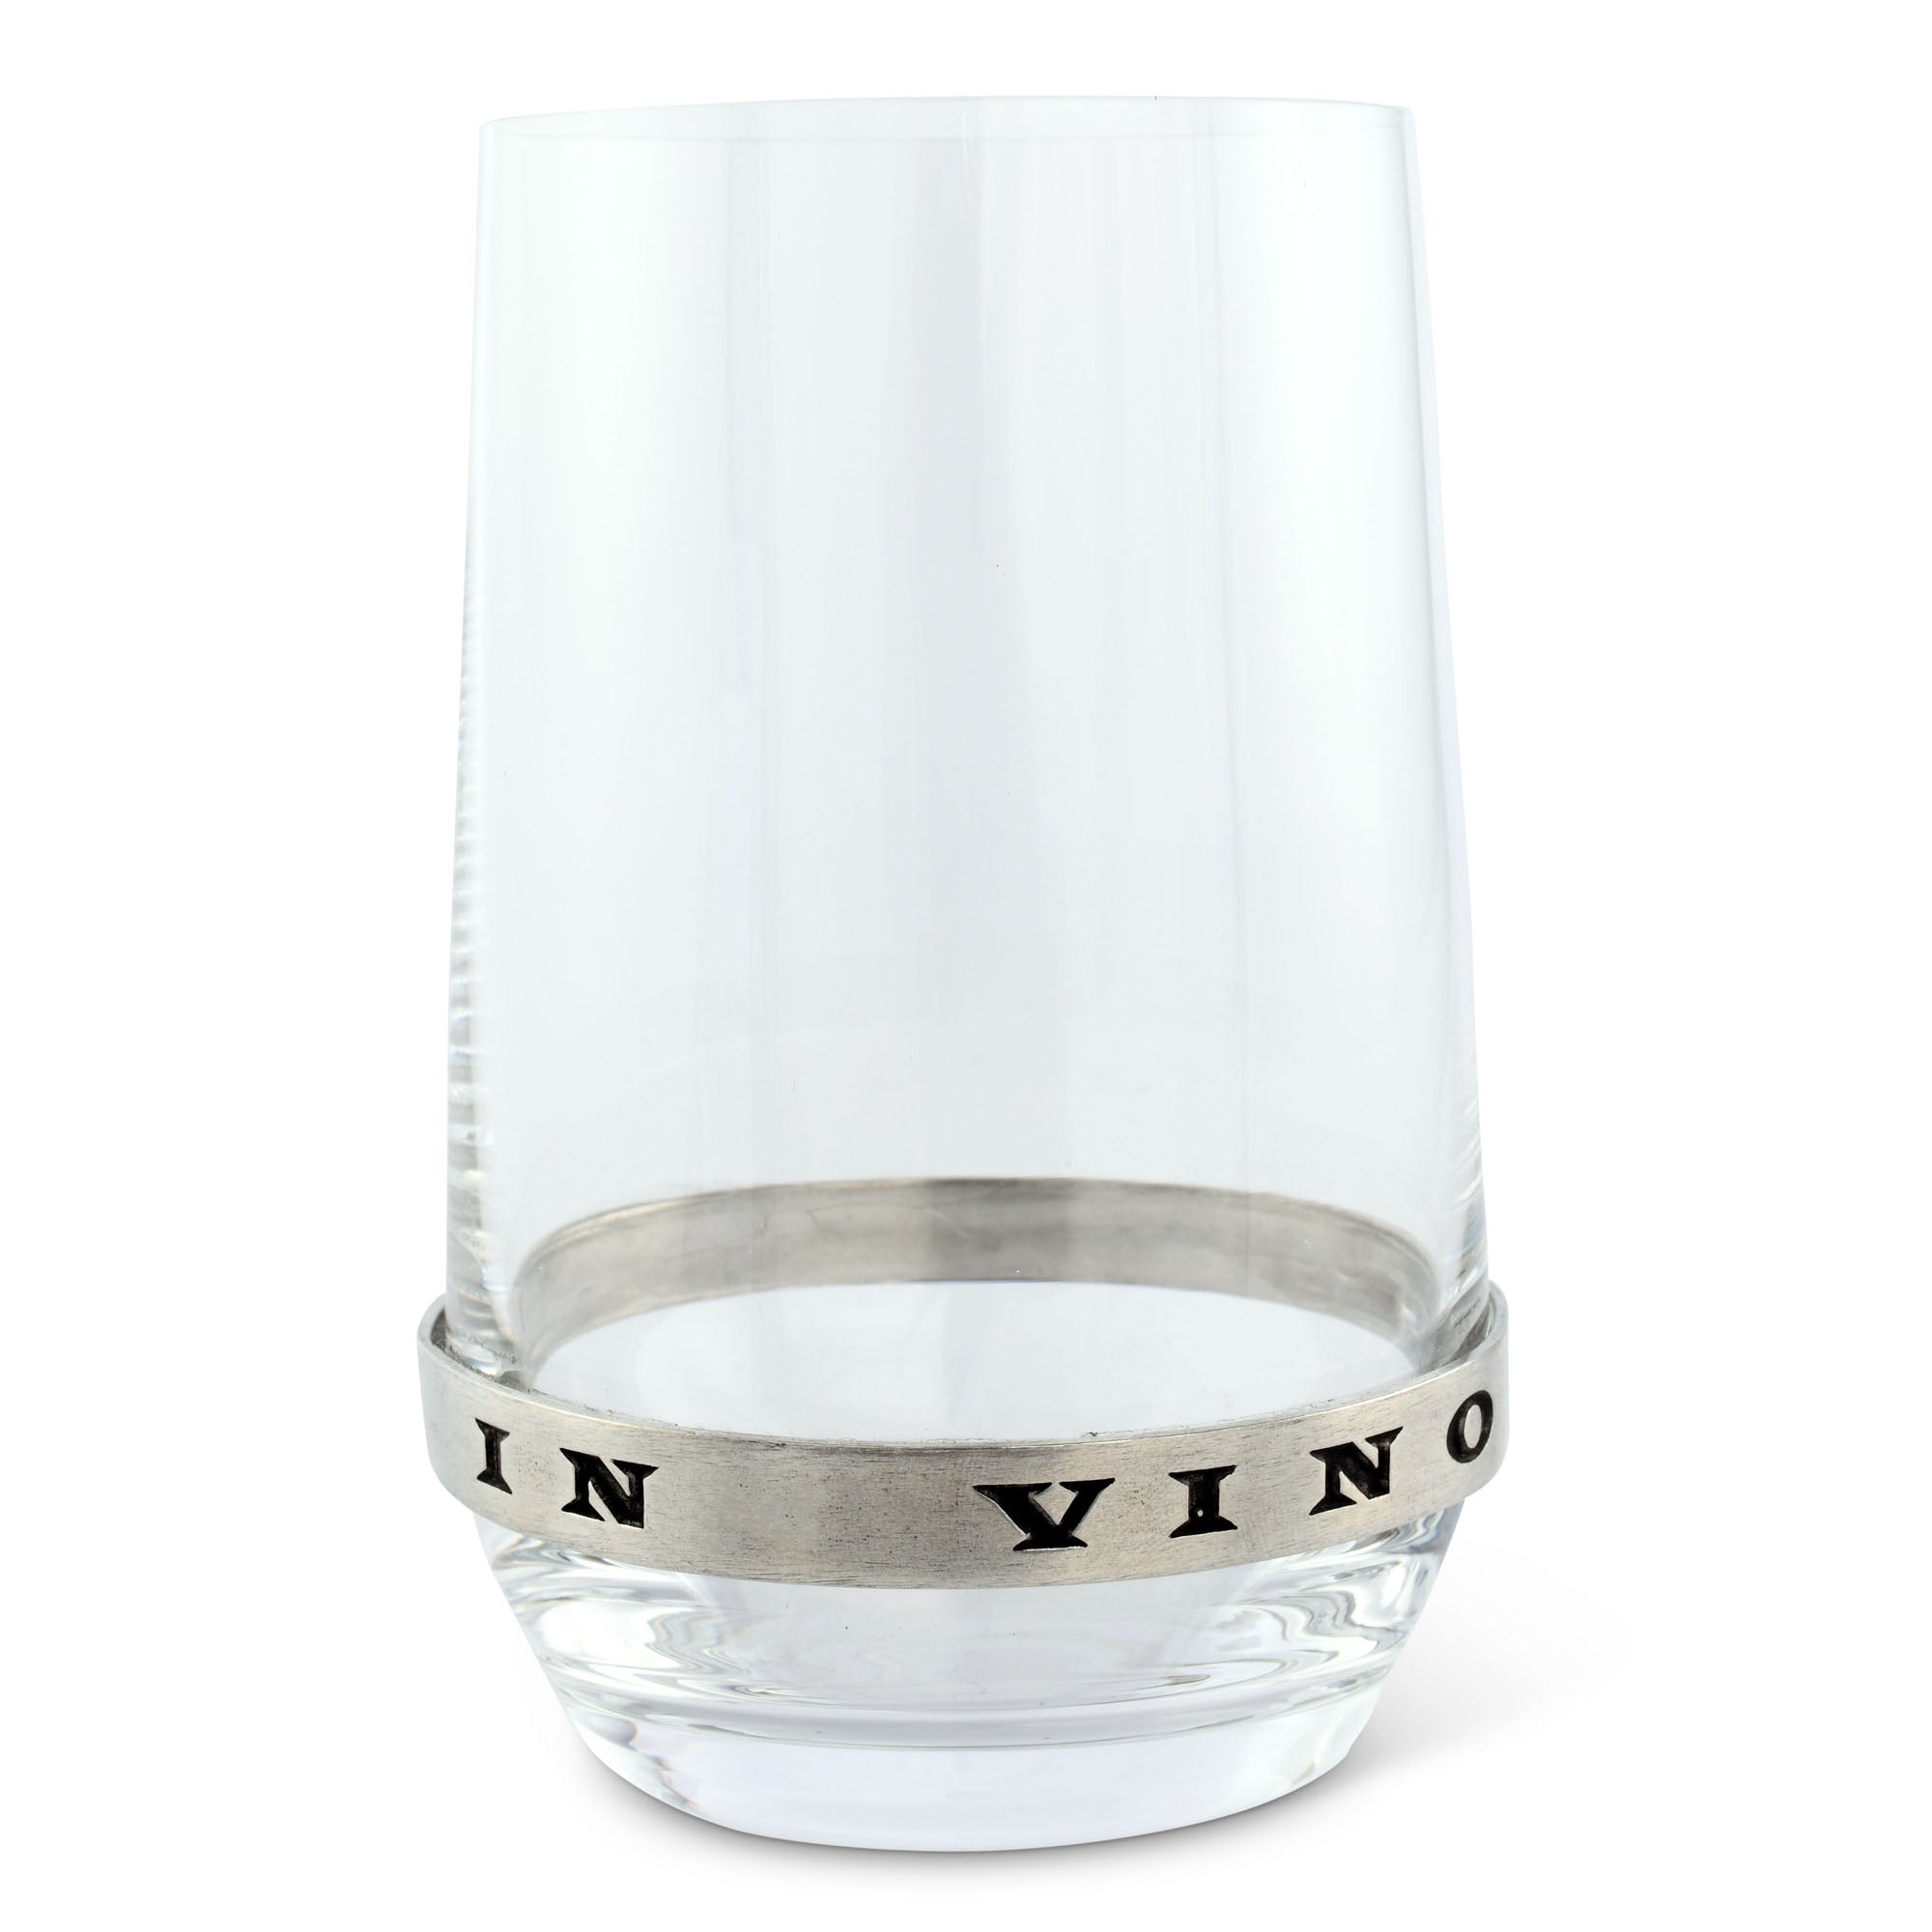 Vagabond House In Vino Veritas Stemless White Wine Glass Product Image